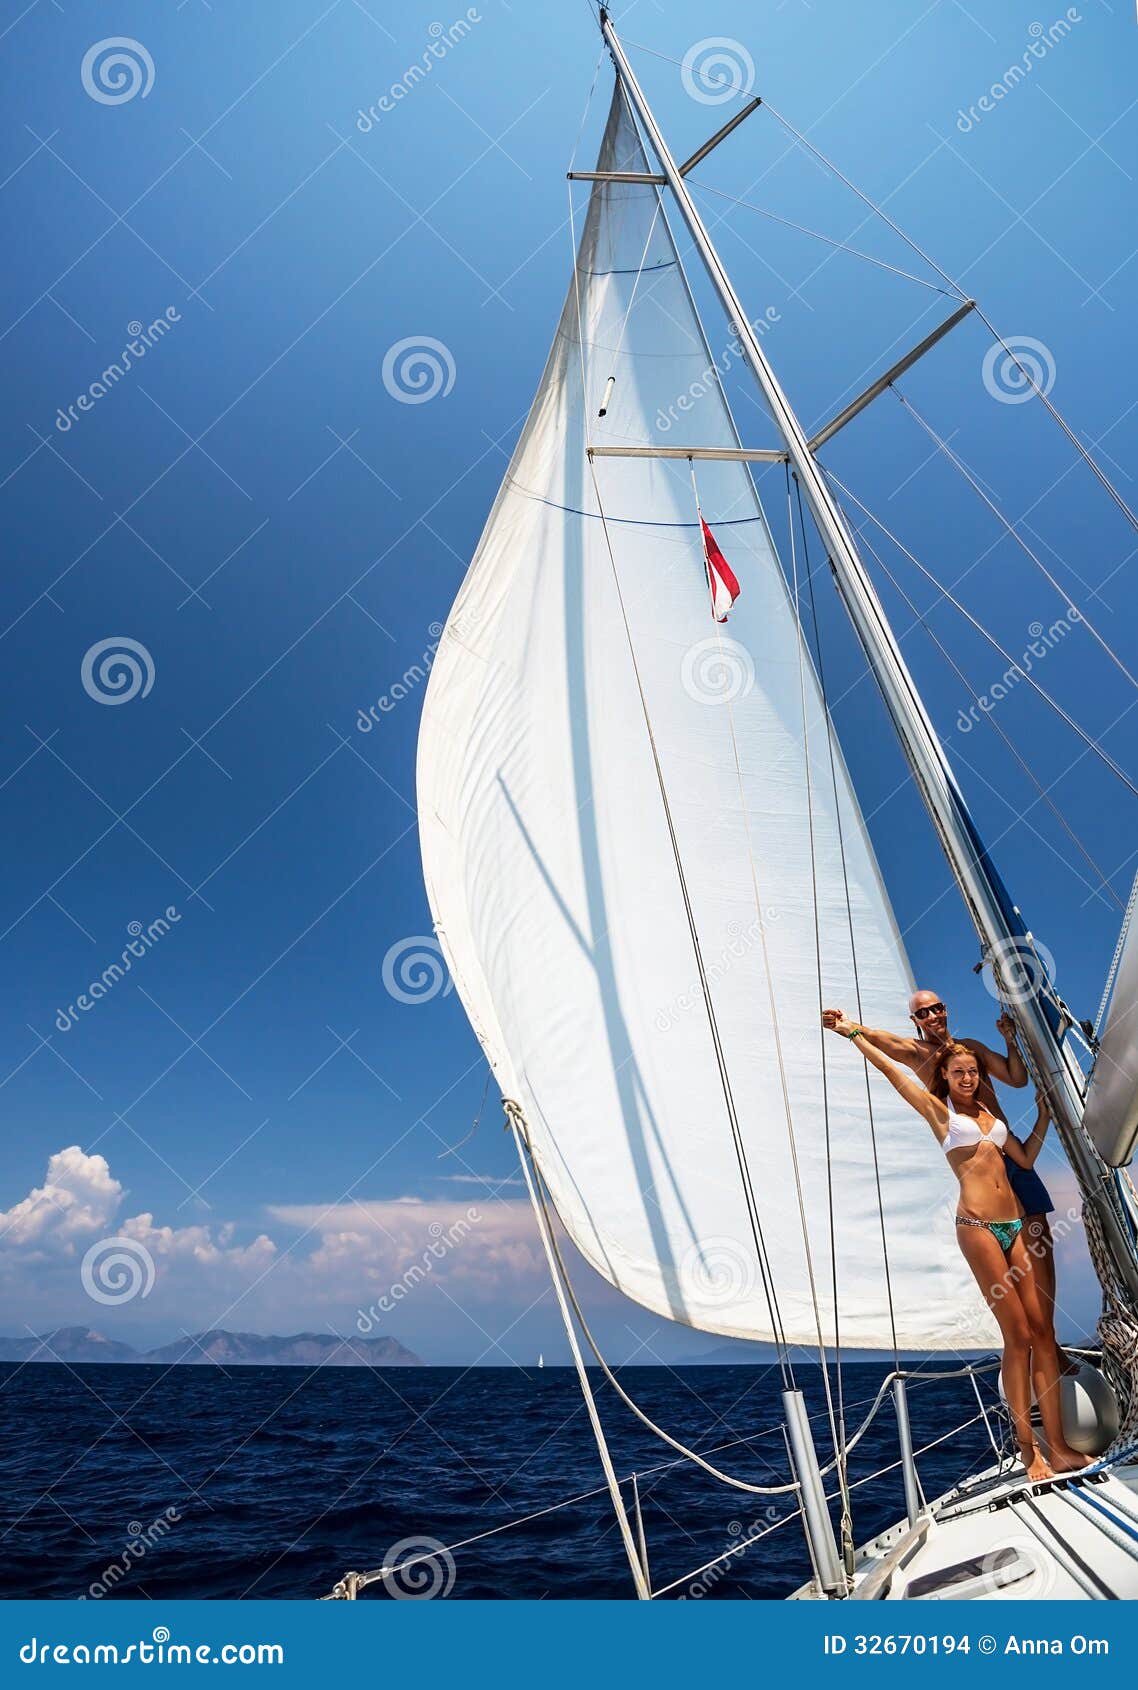 Young sail. Девушка под парусом. Человек на яхте с парусом. Яхта Парус девушка. Яхта под парусом.